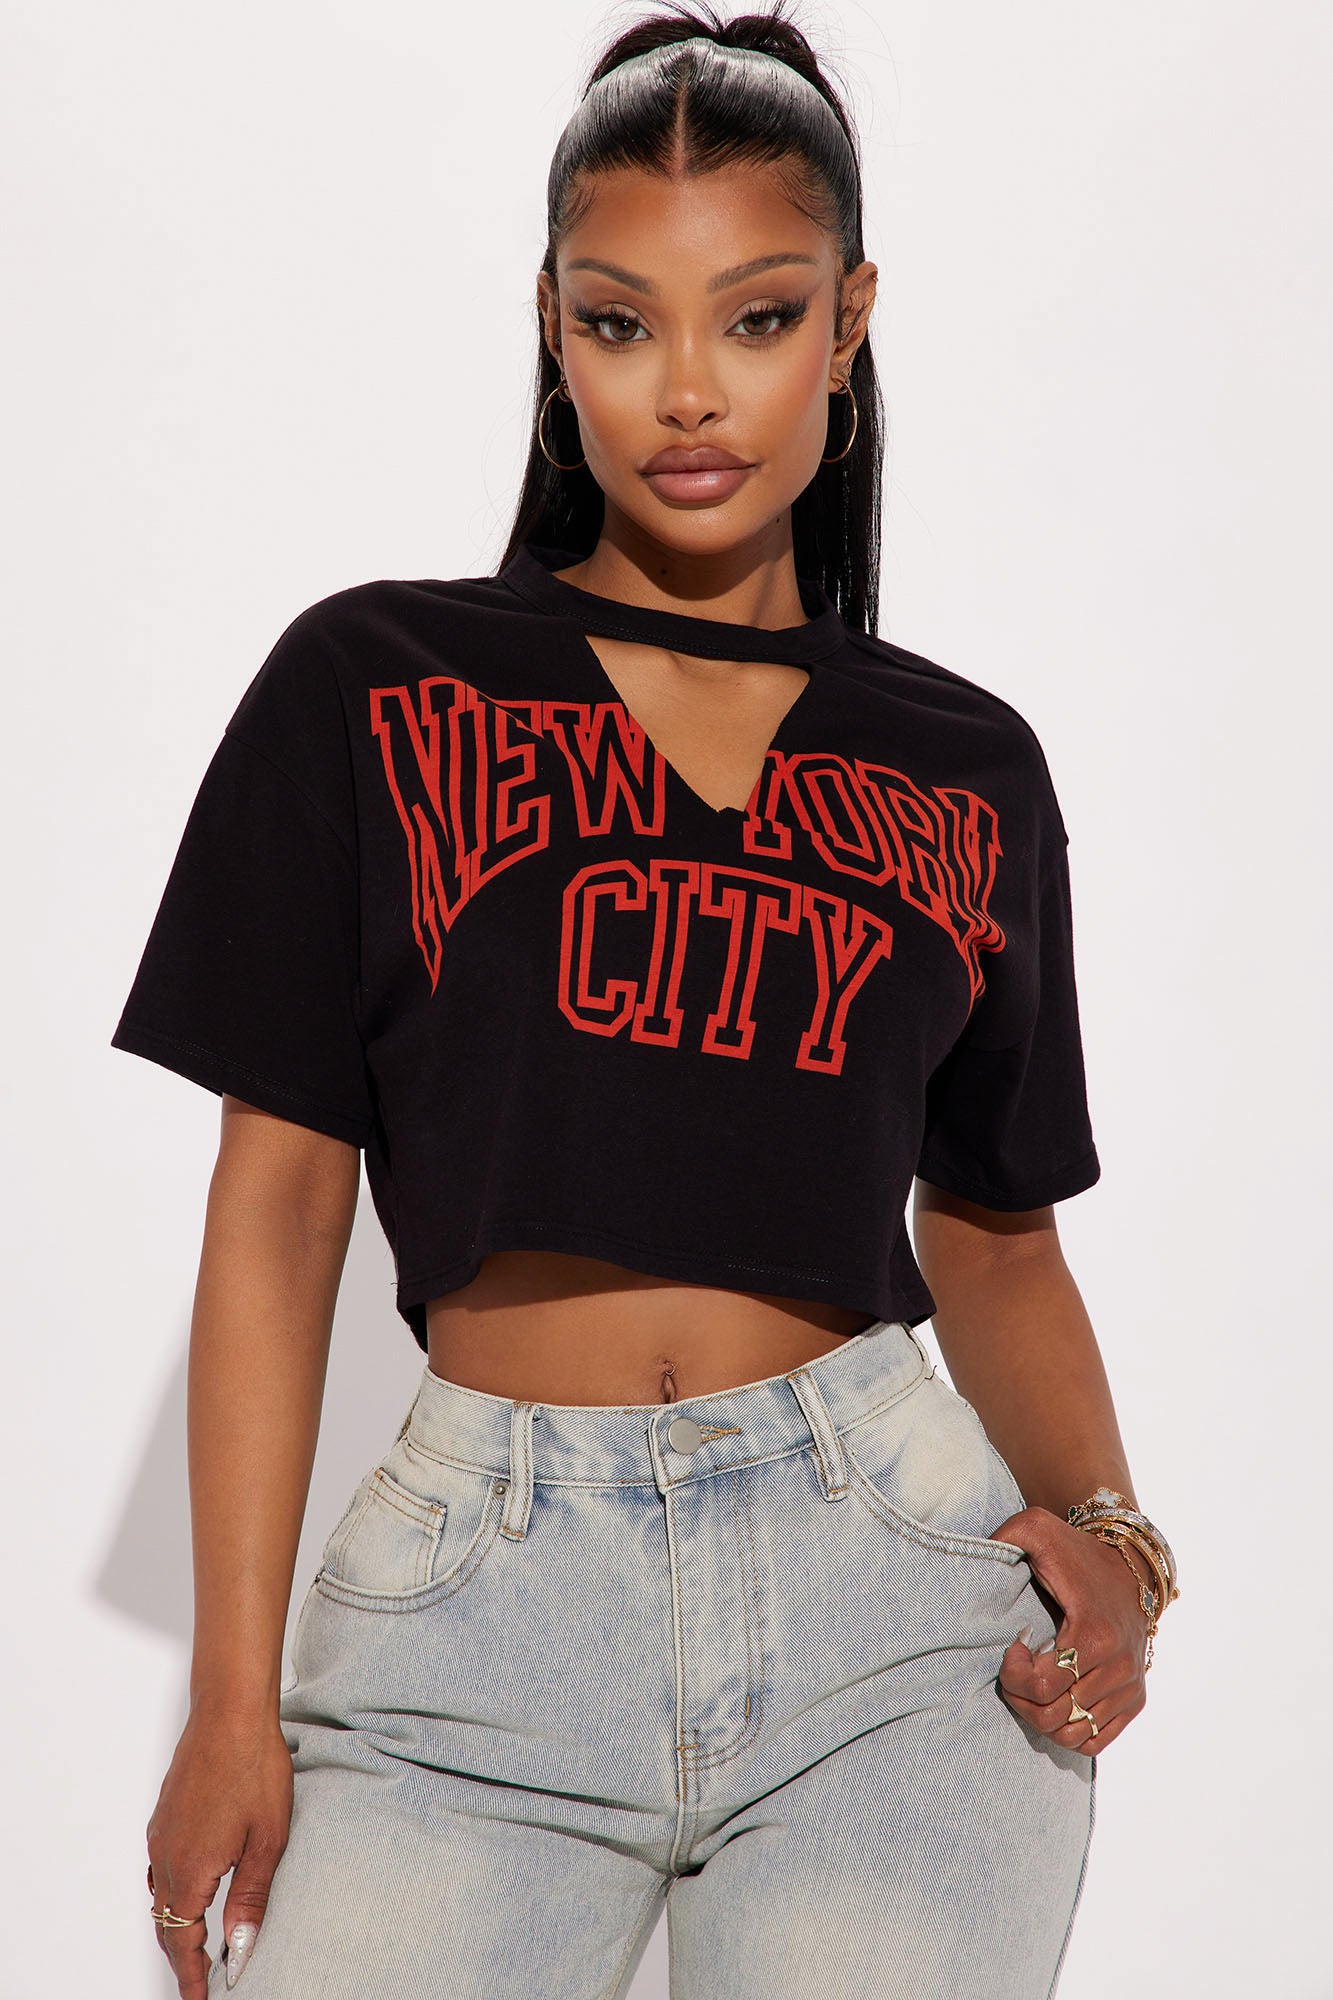 Women's New York Girl T-Shirt in Black/Orange Size Large by Fashion Nova